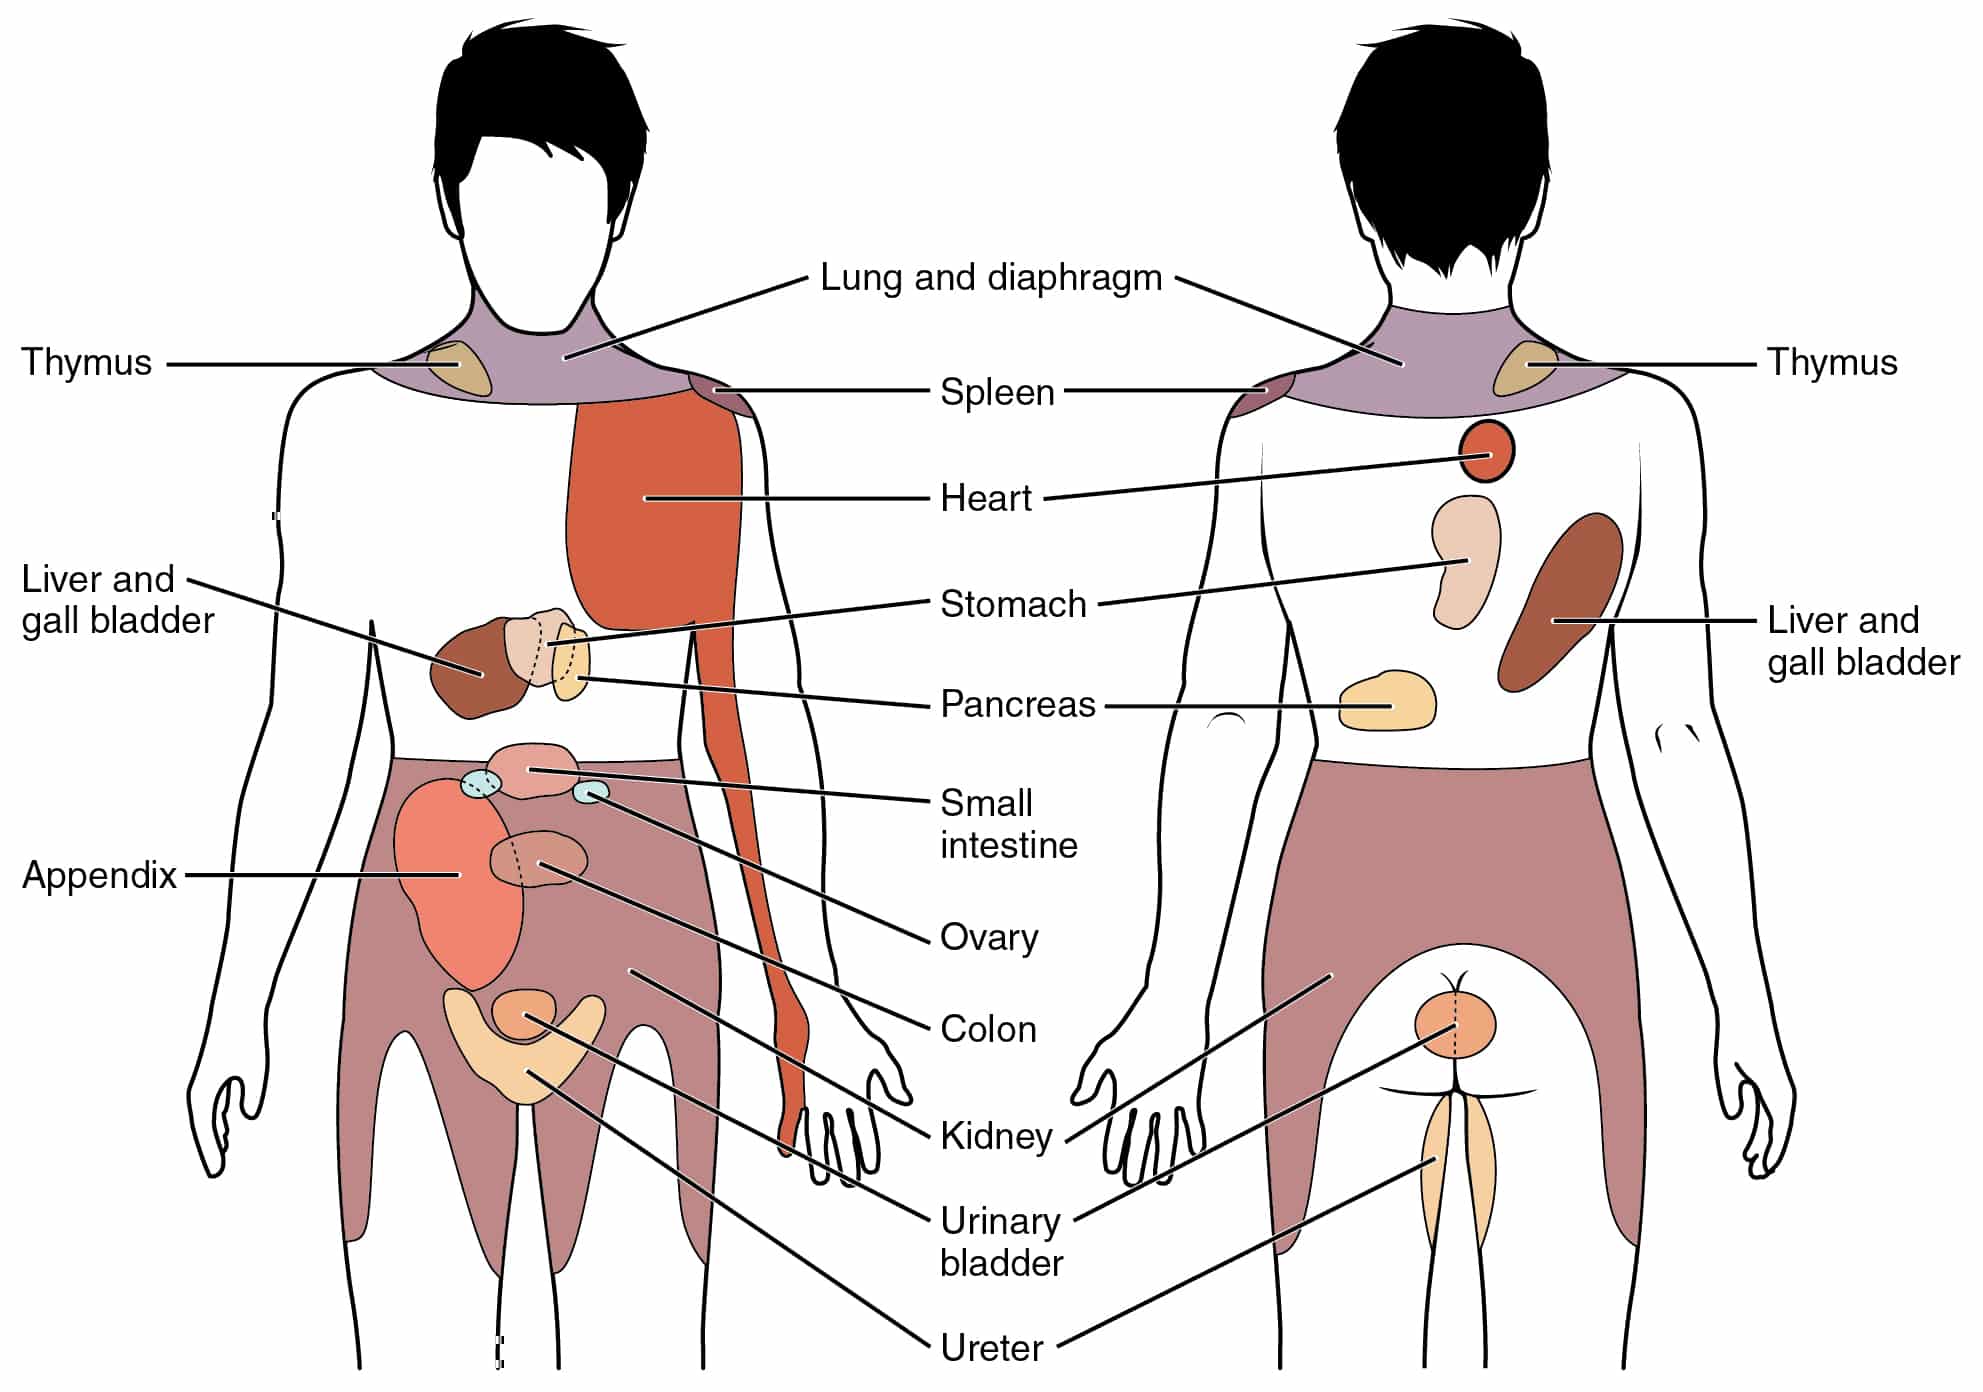 intraperitoneal and retroperitoneal organs